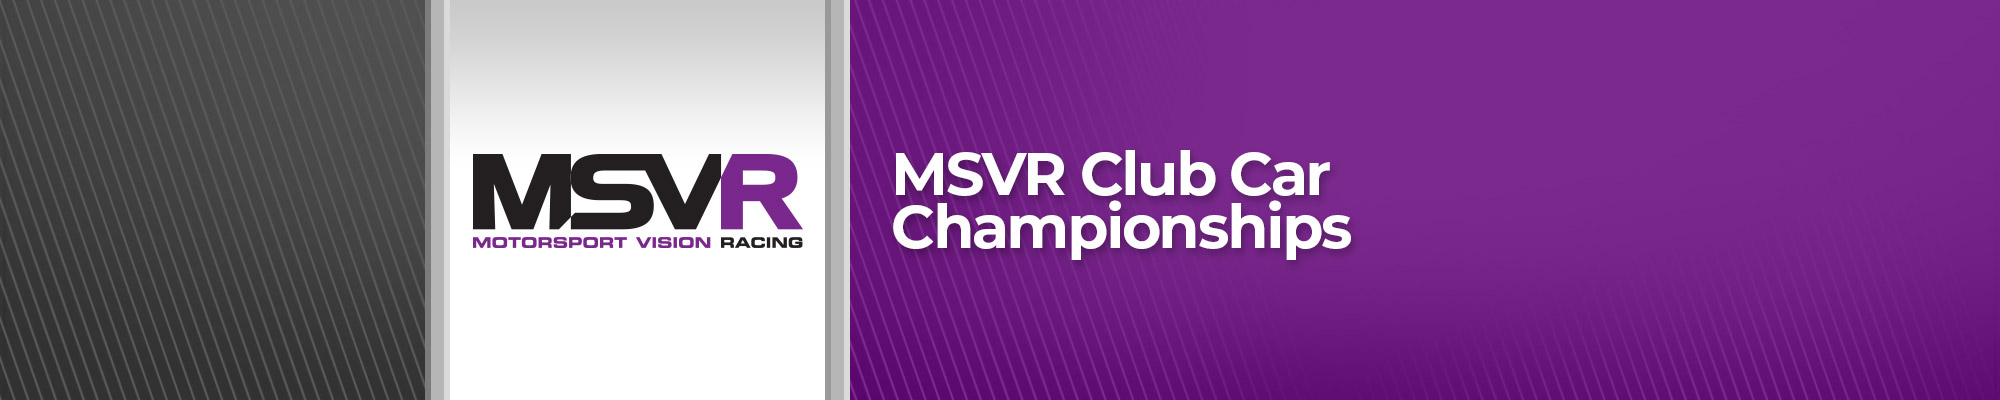 MSVR Club Car Championships - starring GT Cup